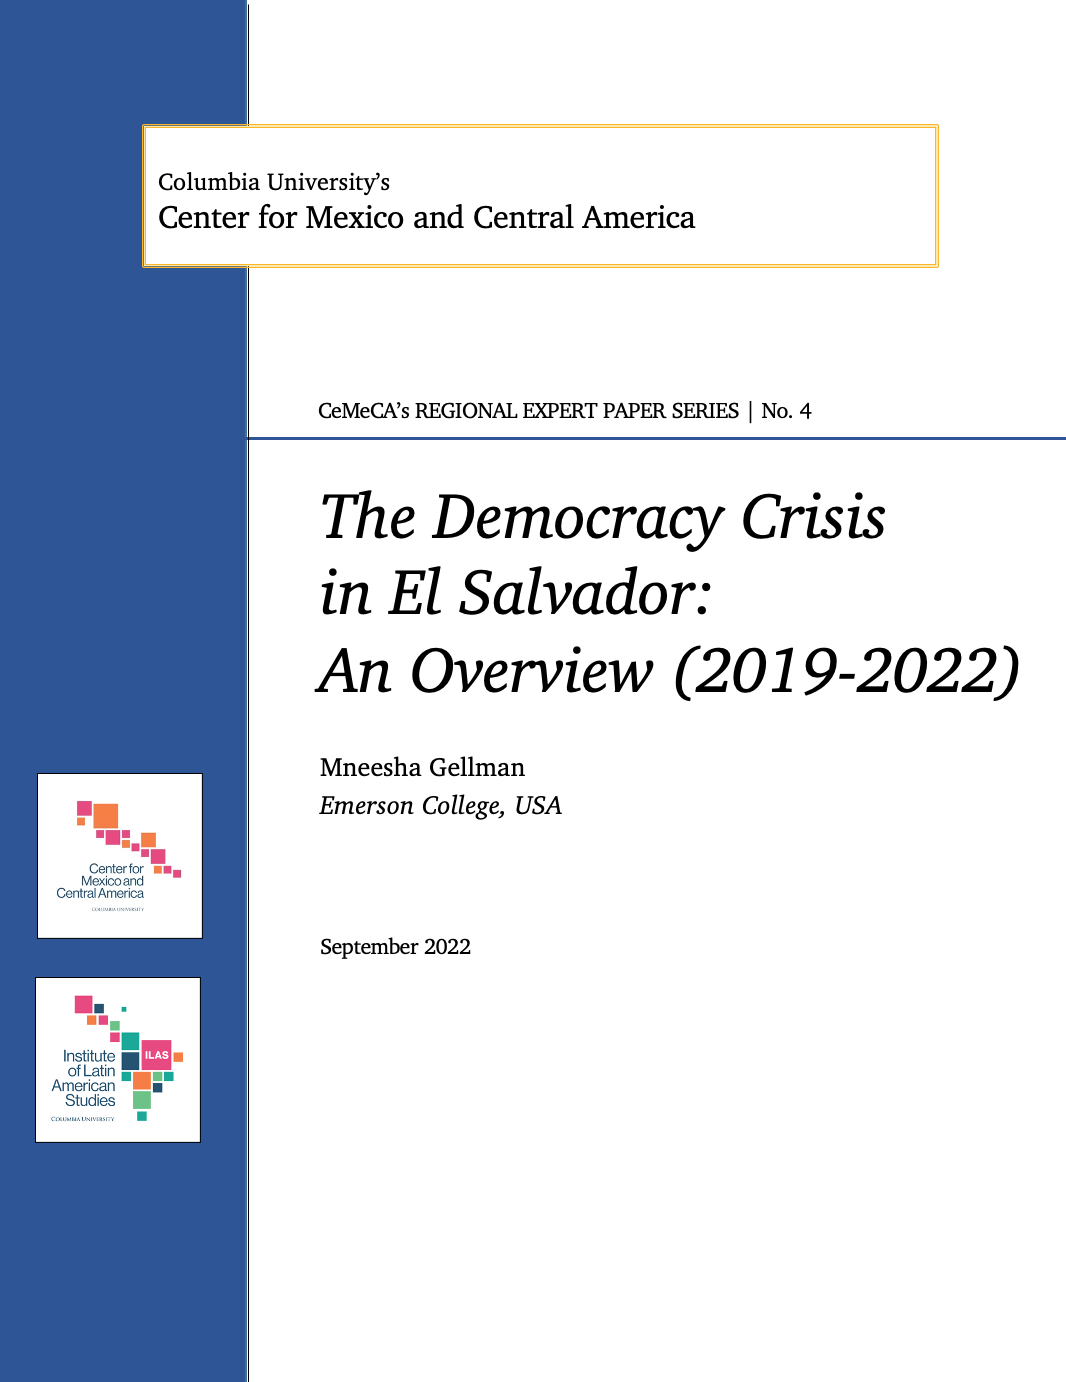 Flyer: The Democracy Crisis in El Salvador: An Overview (2019-2022)